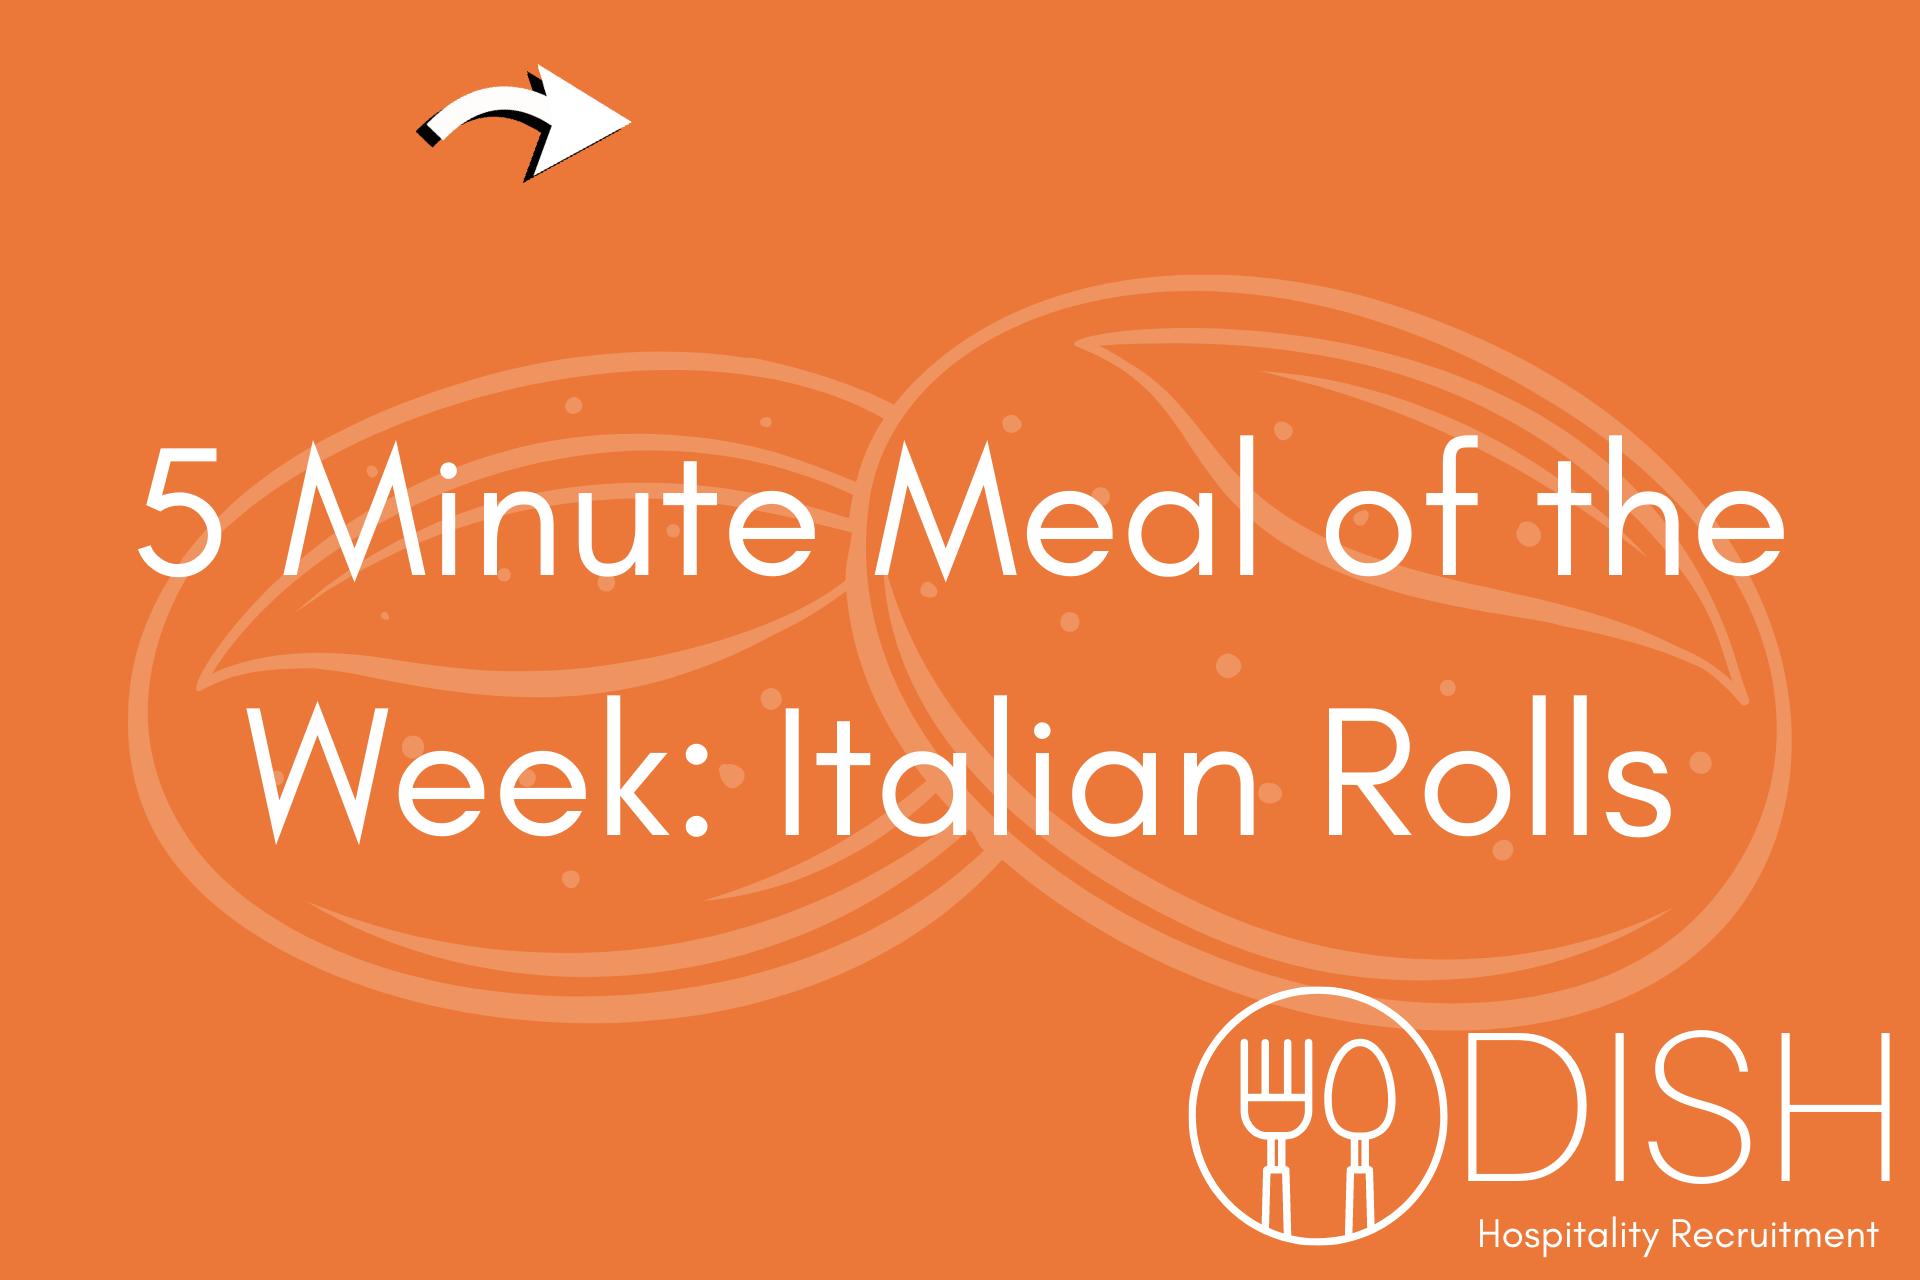 5 Minute Meal of the Week: Italian Rolls